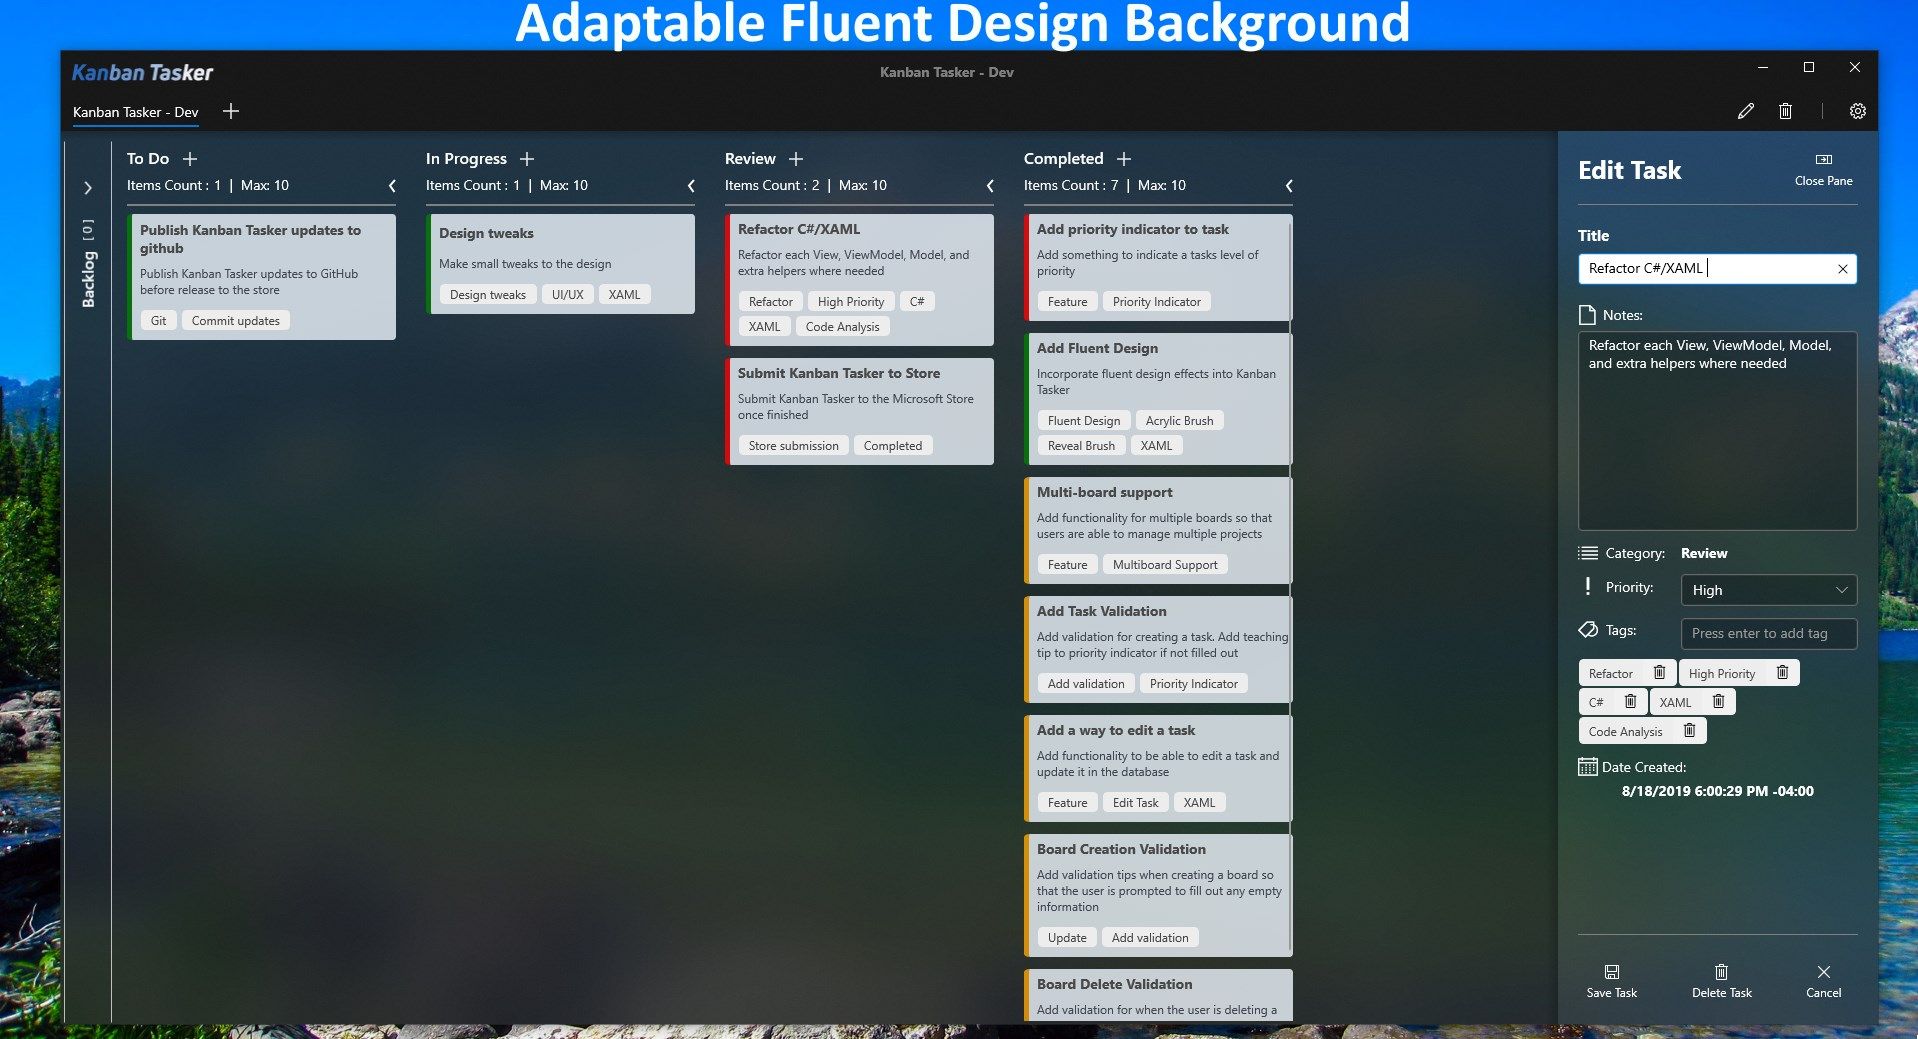 Adaptable Fluent Design Background